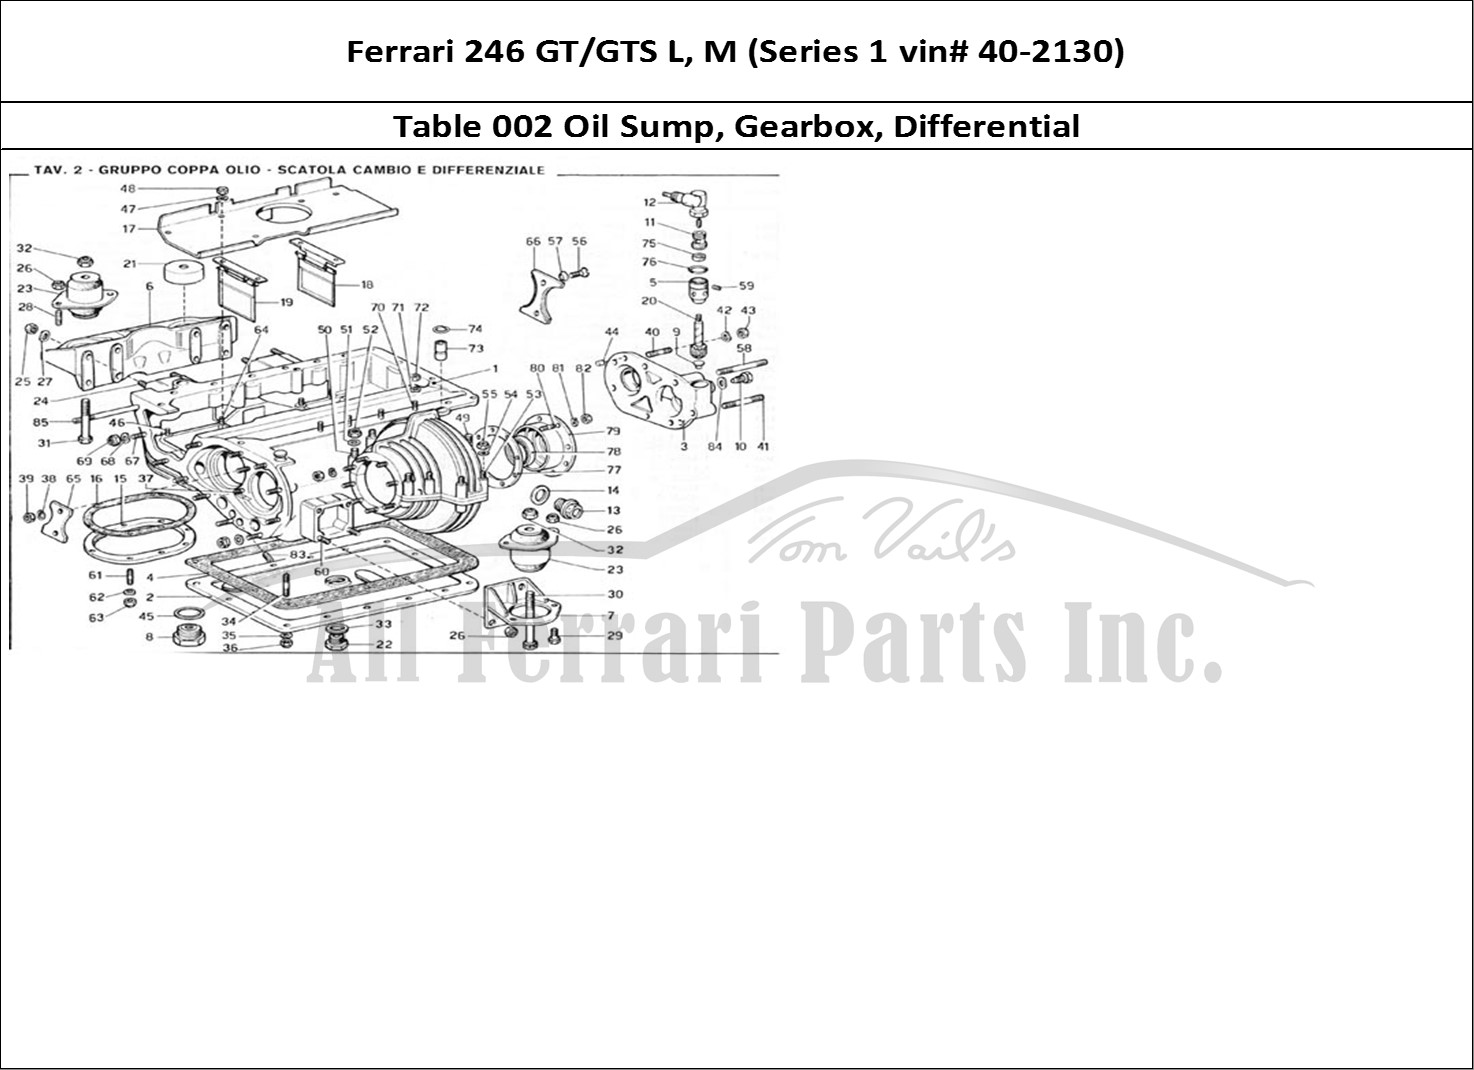 Ferrari Parts Ferrari 246 GT Series 1 Page 002 Oil Sump - Gearbox & Diff